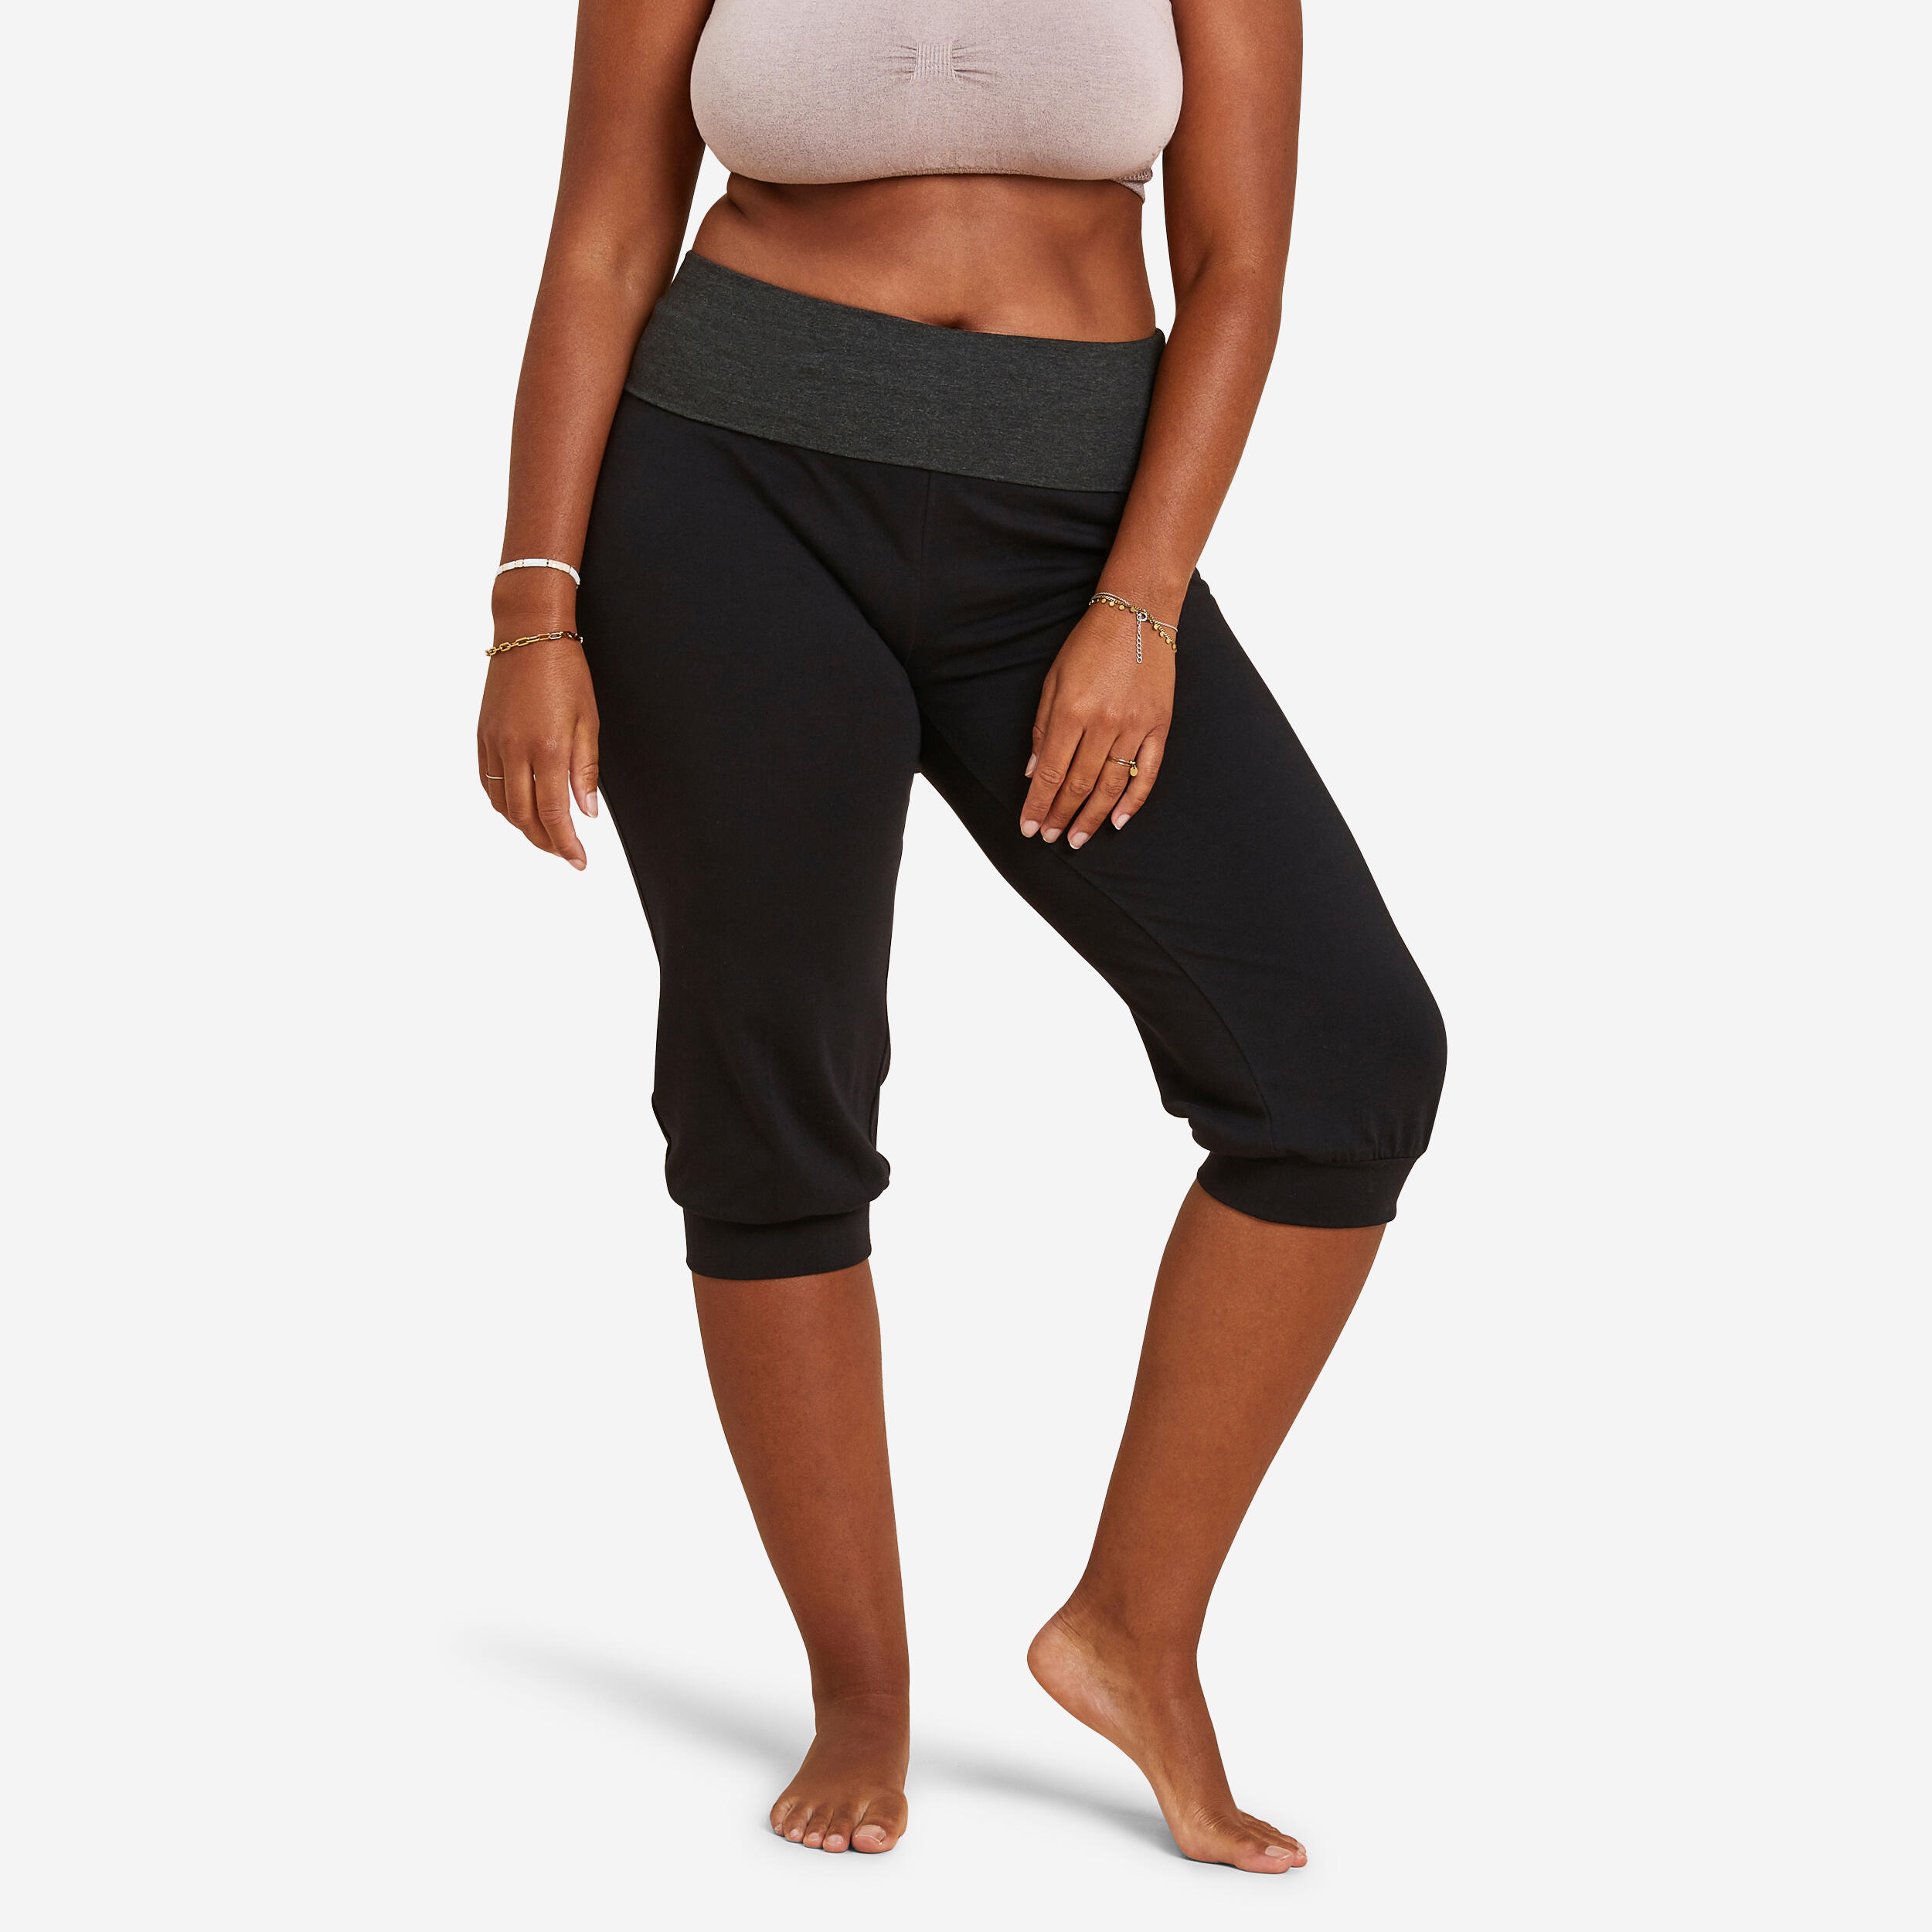 Women's High-Waisted Yoga Pants - Black, Dark grey - Kimjaly